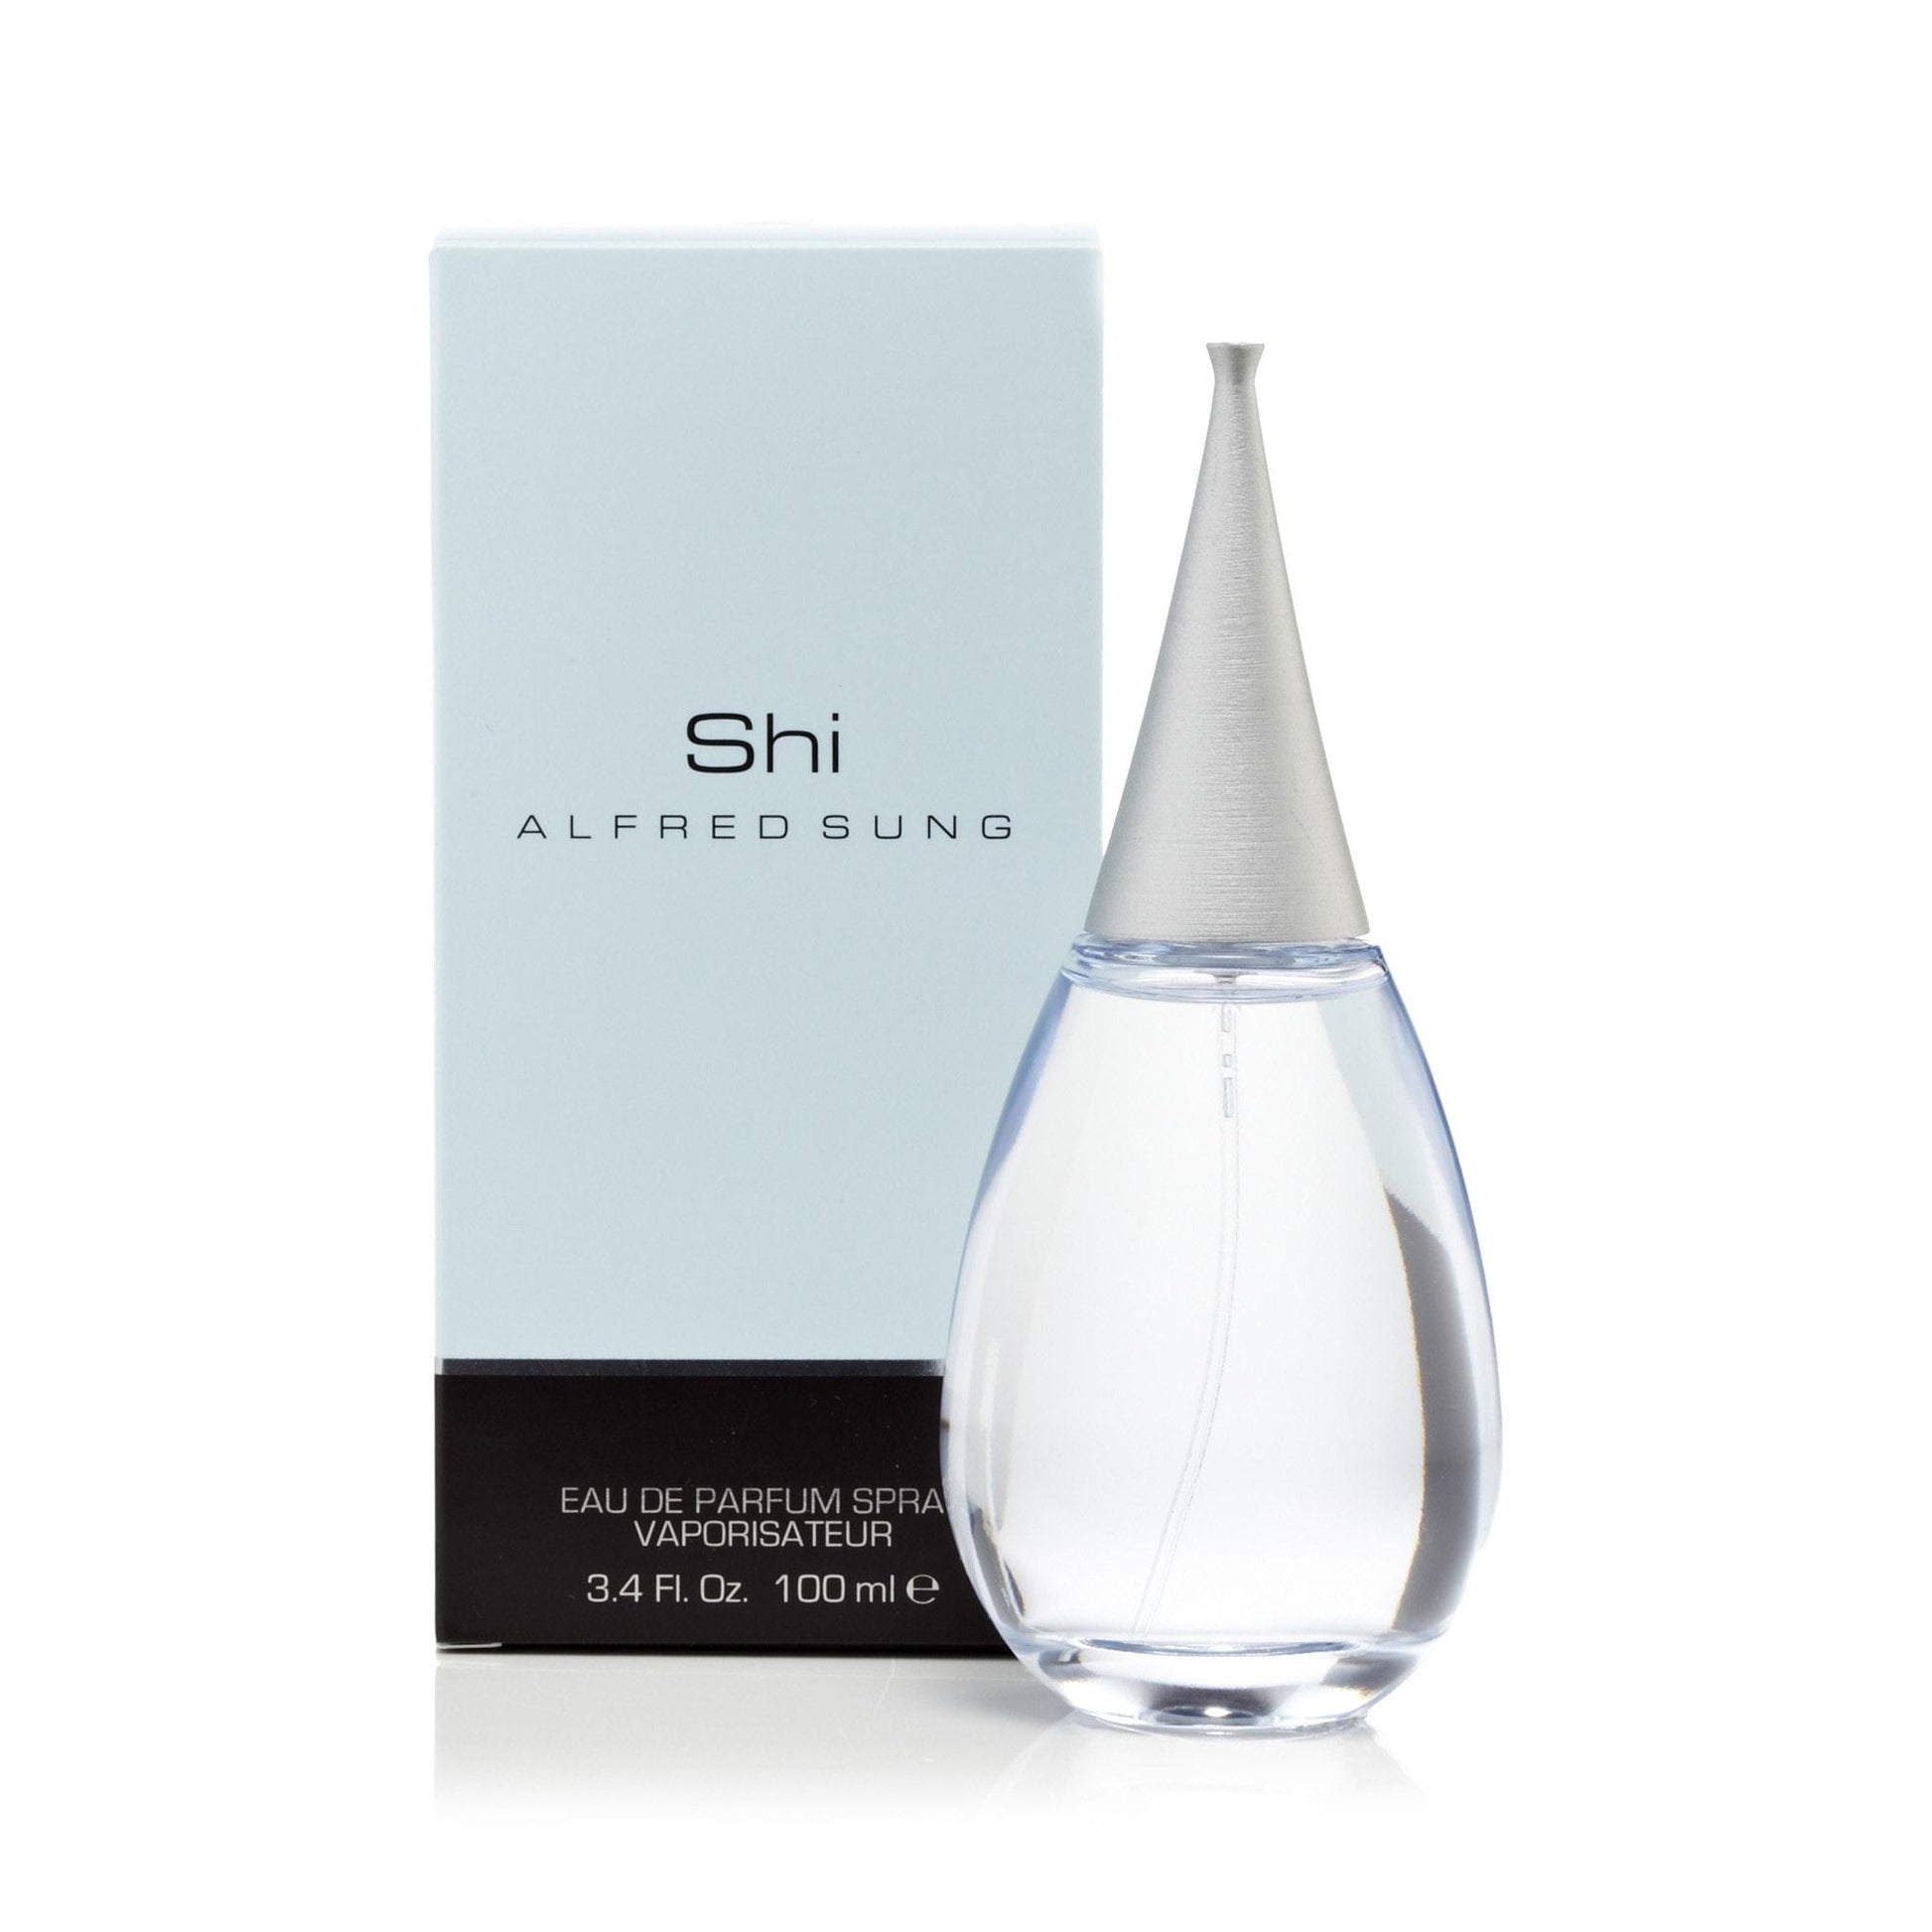 Shi Eau de Parfum Spray for Women by Alfred Sung, Product image 5